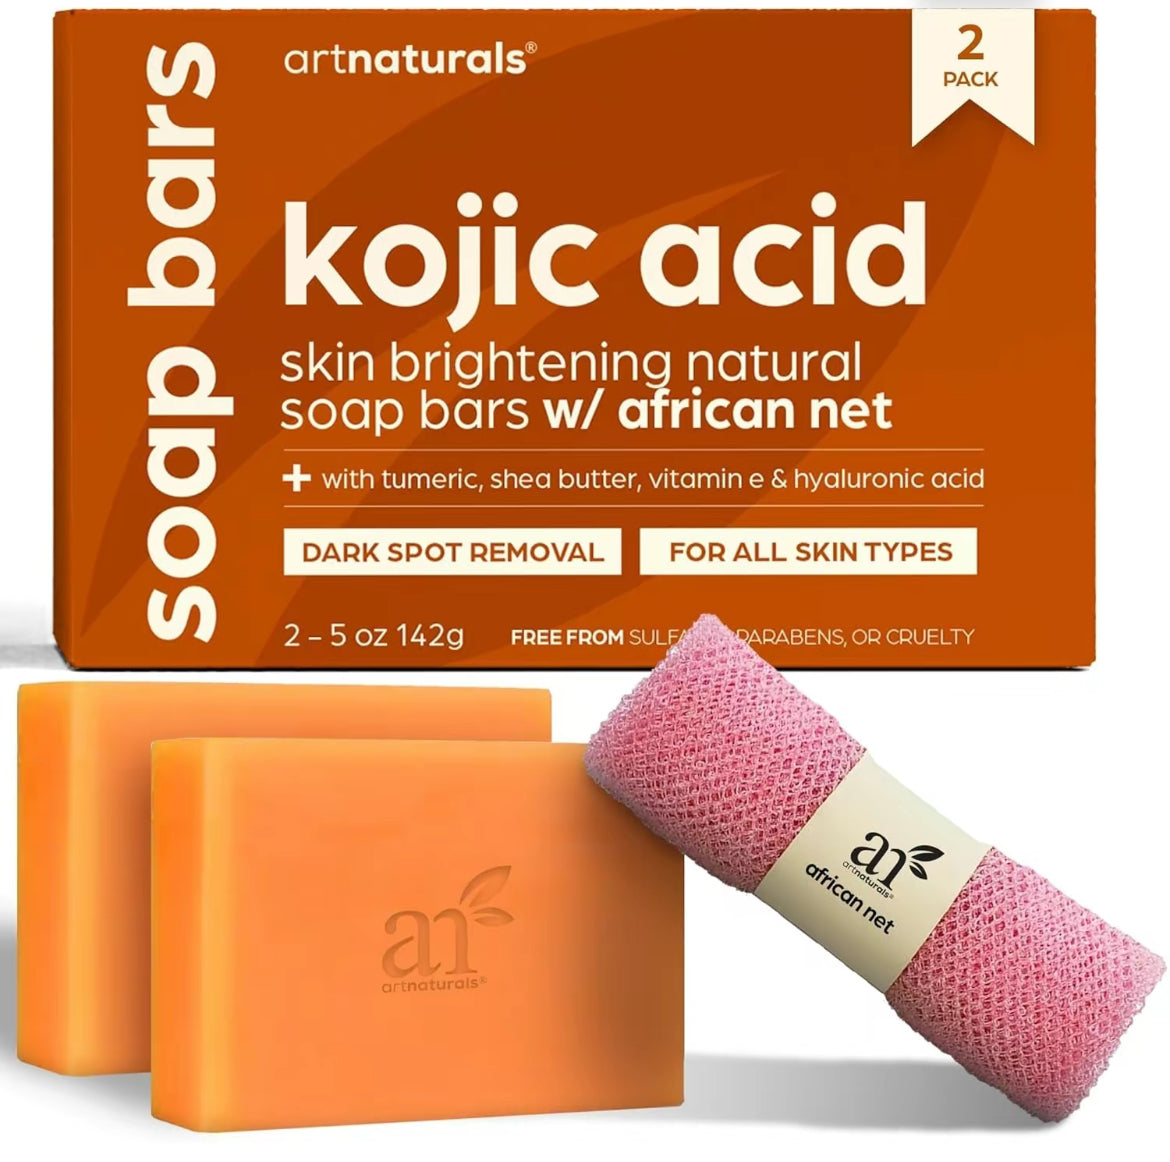 Kojic Acid Soap + African Net Soap (2 pack)